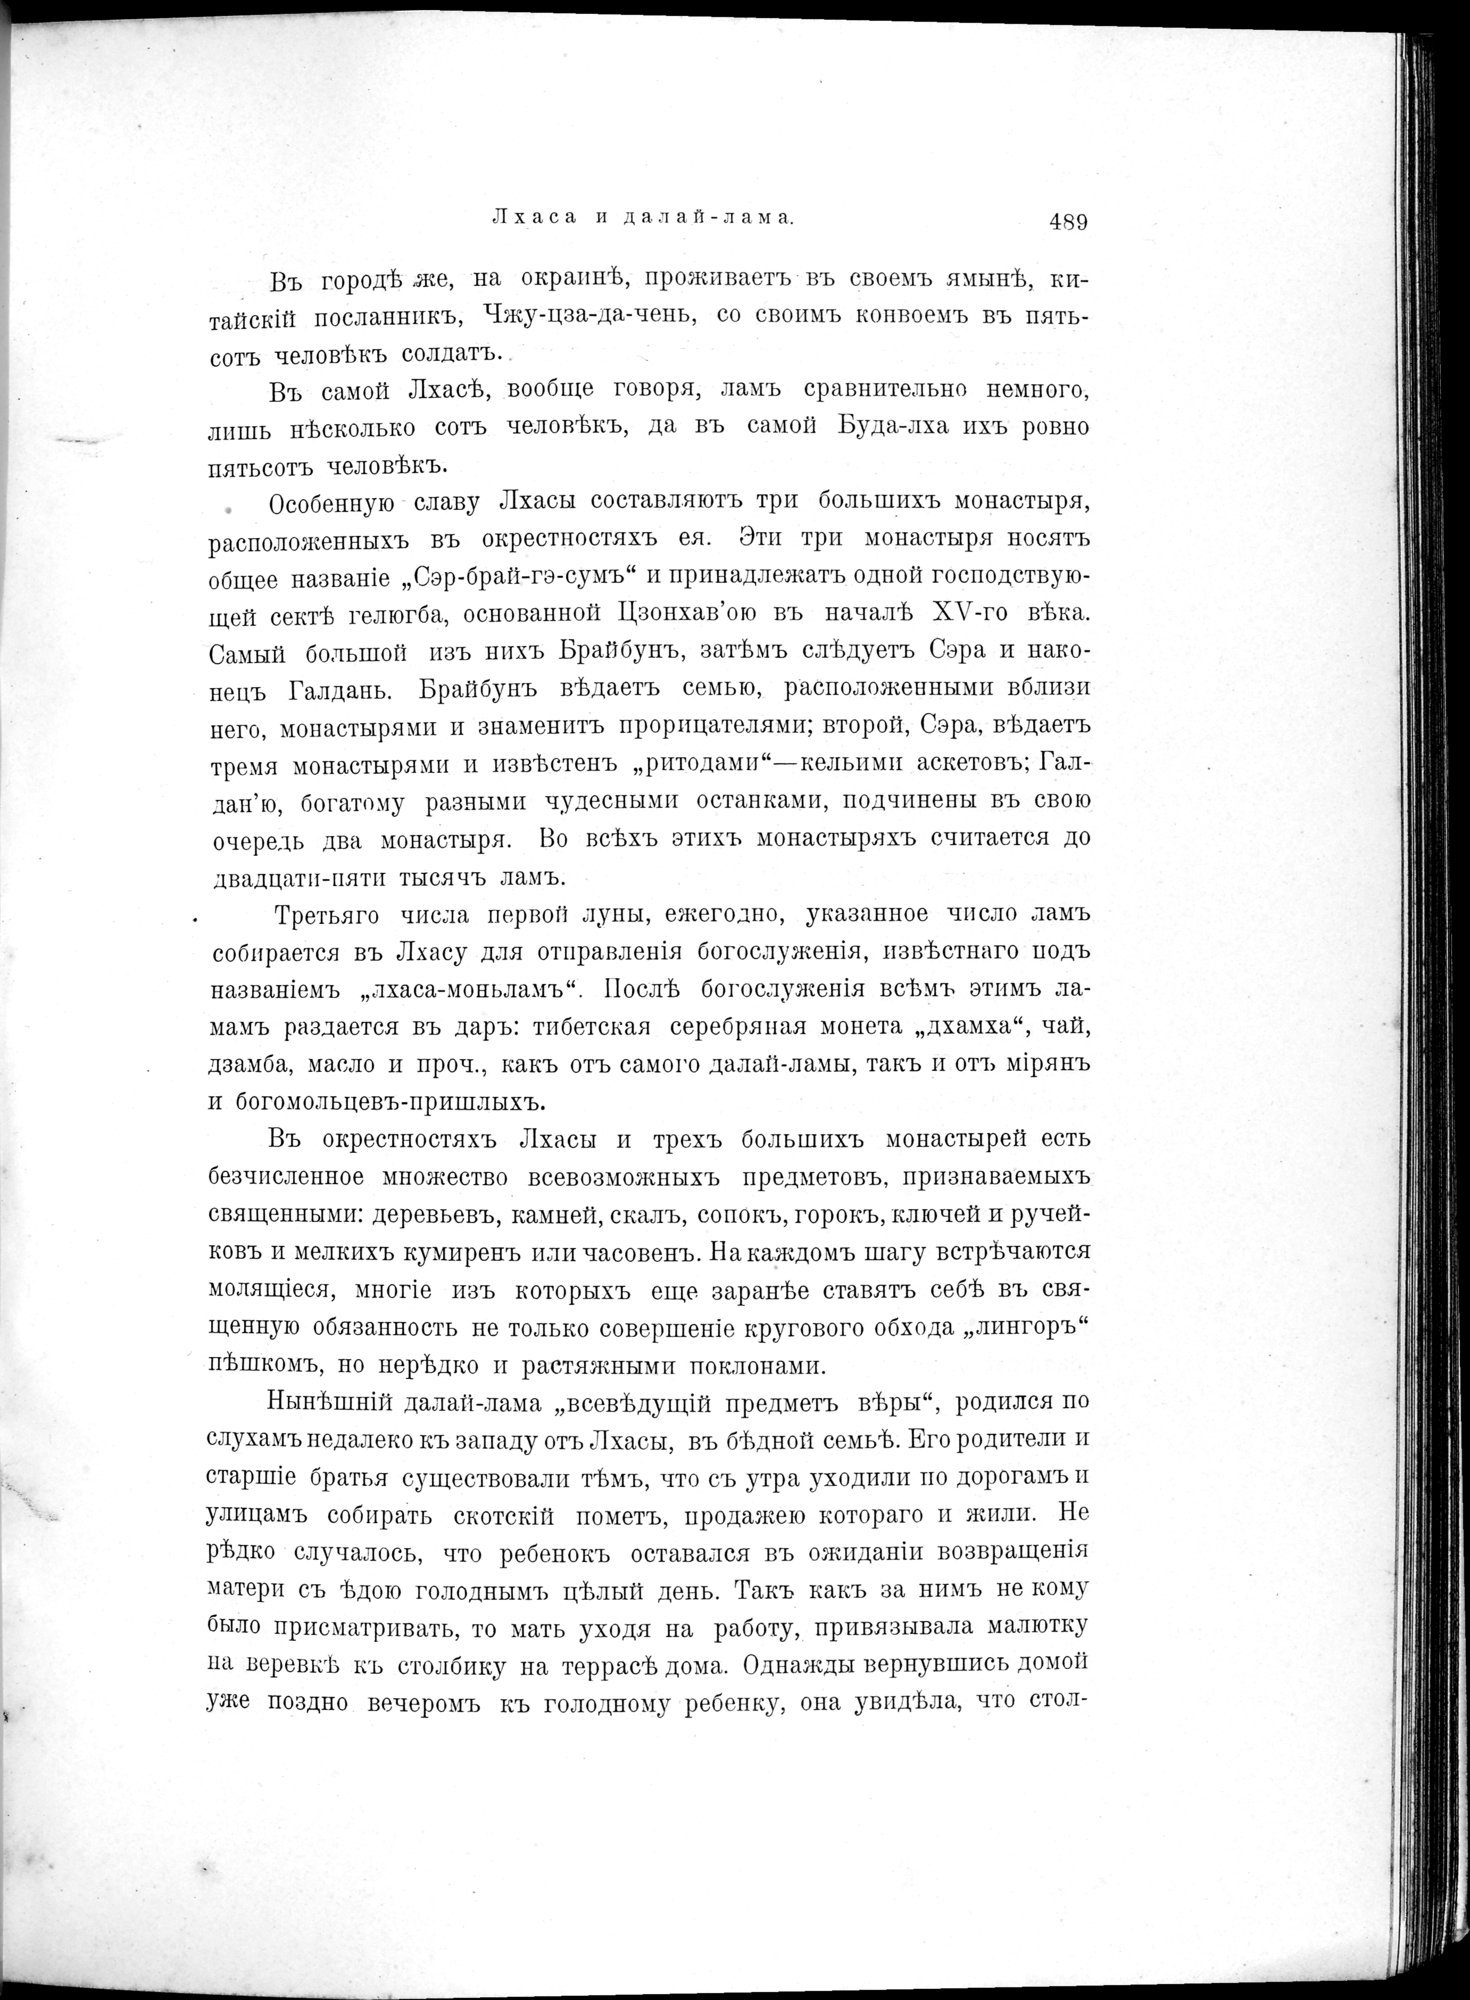 Mongoliia i Kam : vol.2 / Page 305 (Grayscale High Resolution Image)